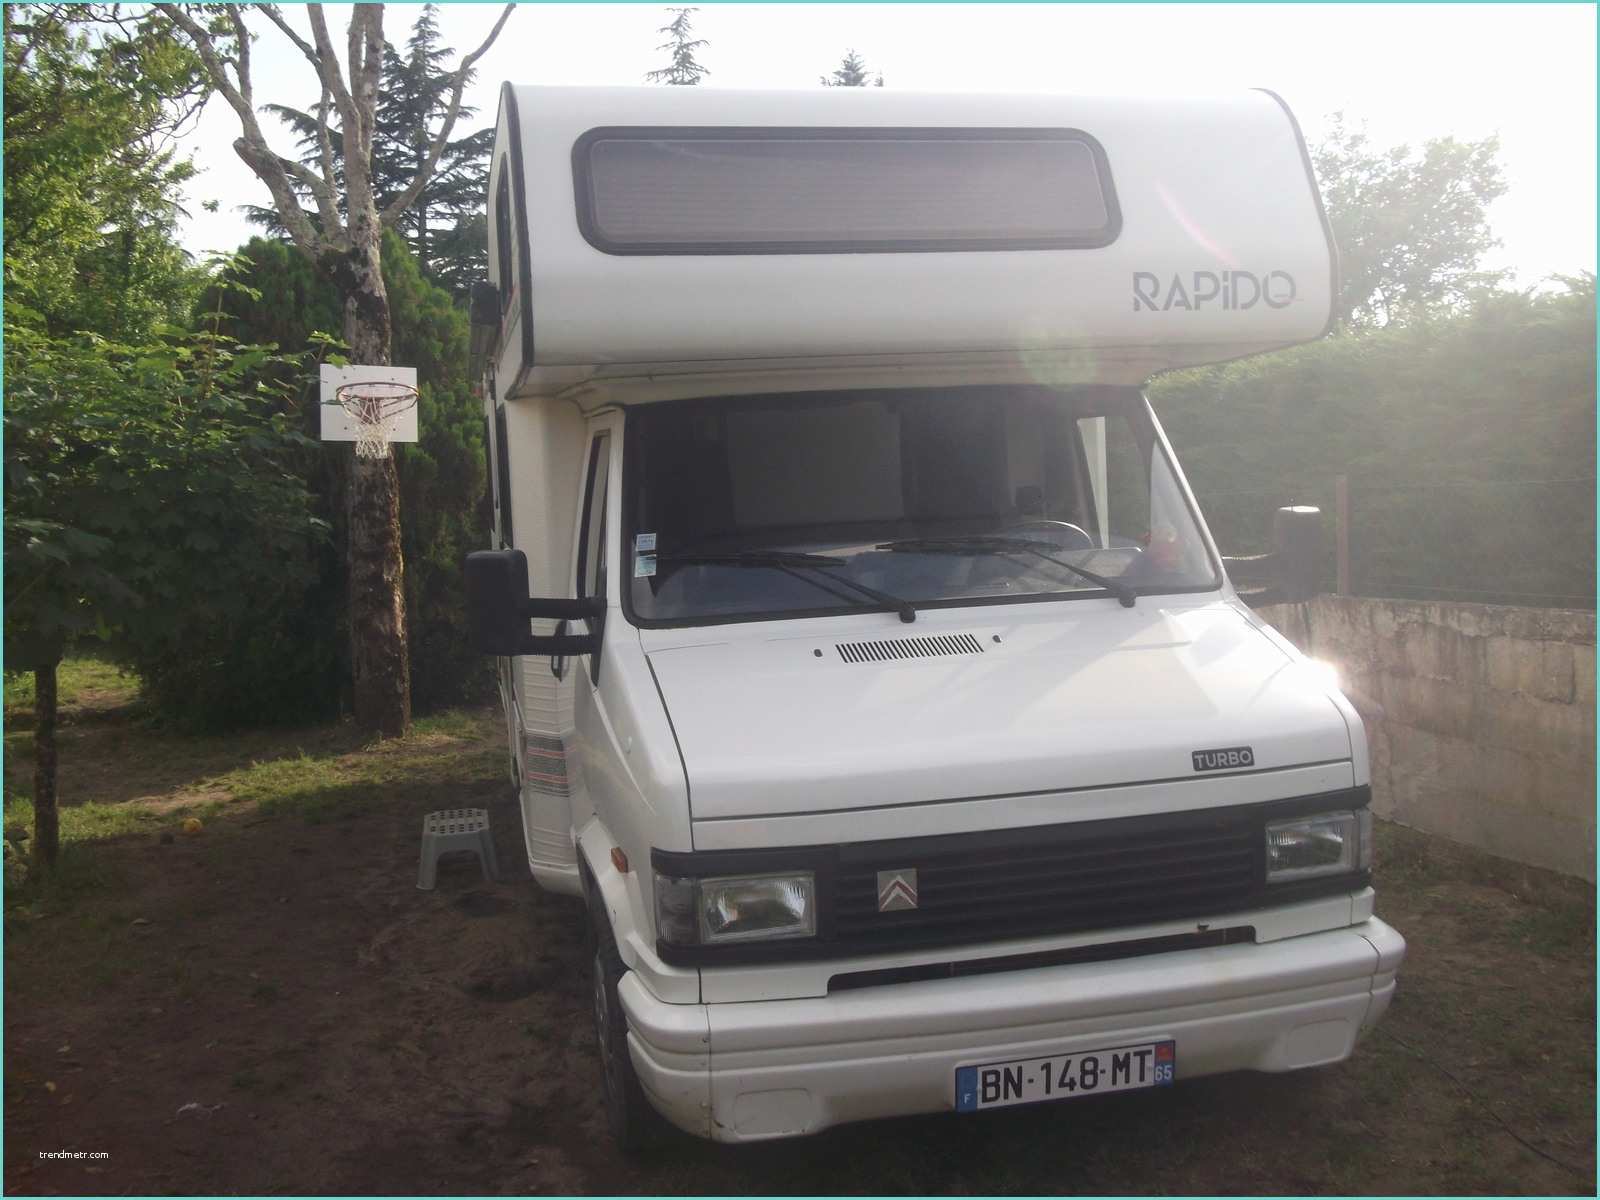 Relooking Interieur Camping Car Mon Camping Car C25 Rapido Apres Achat Renovation Du